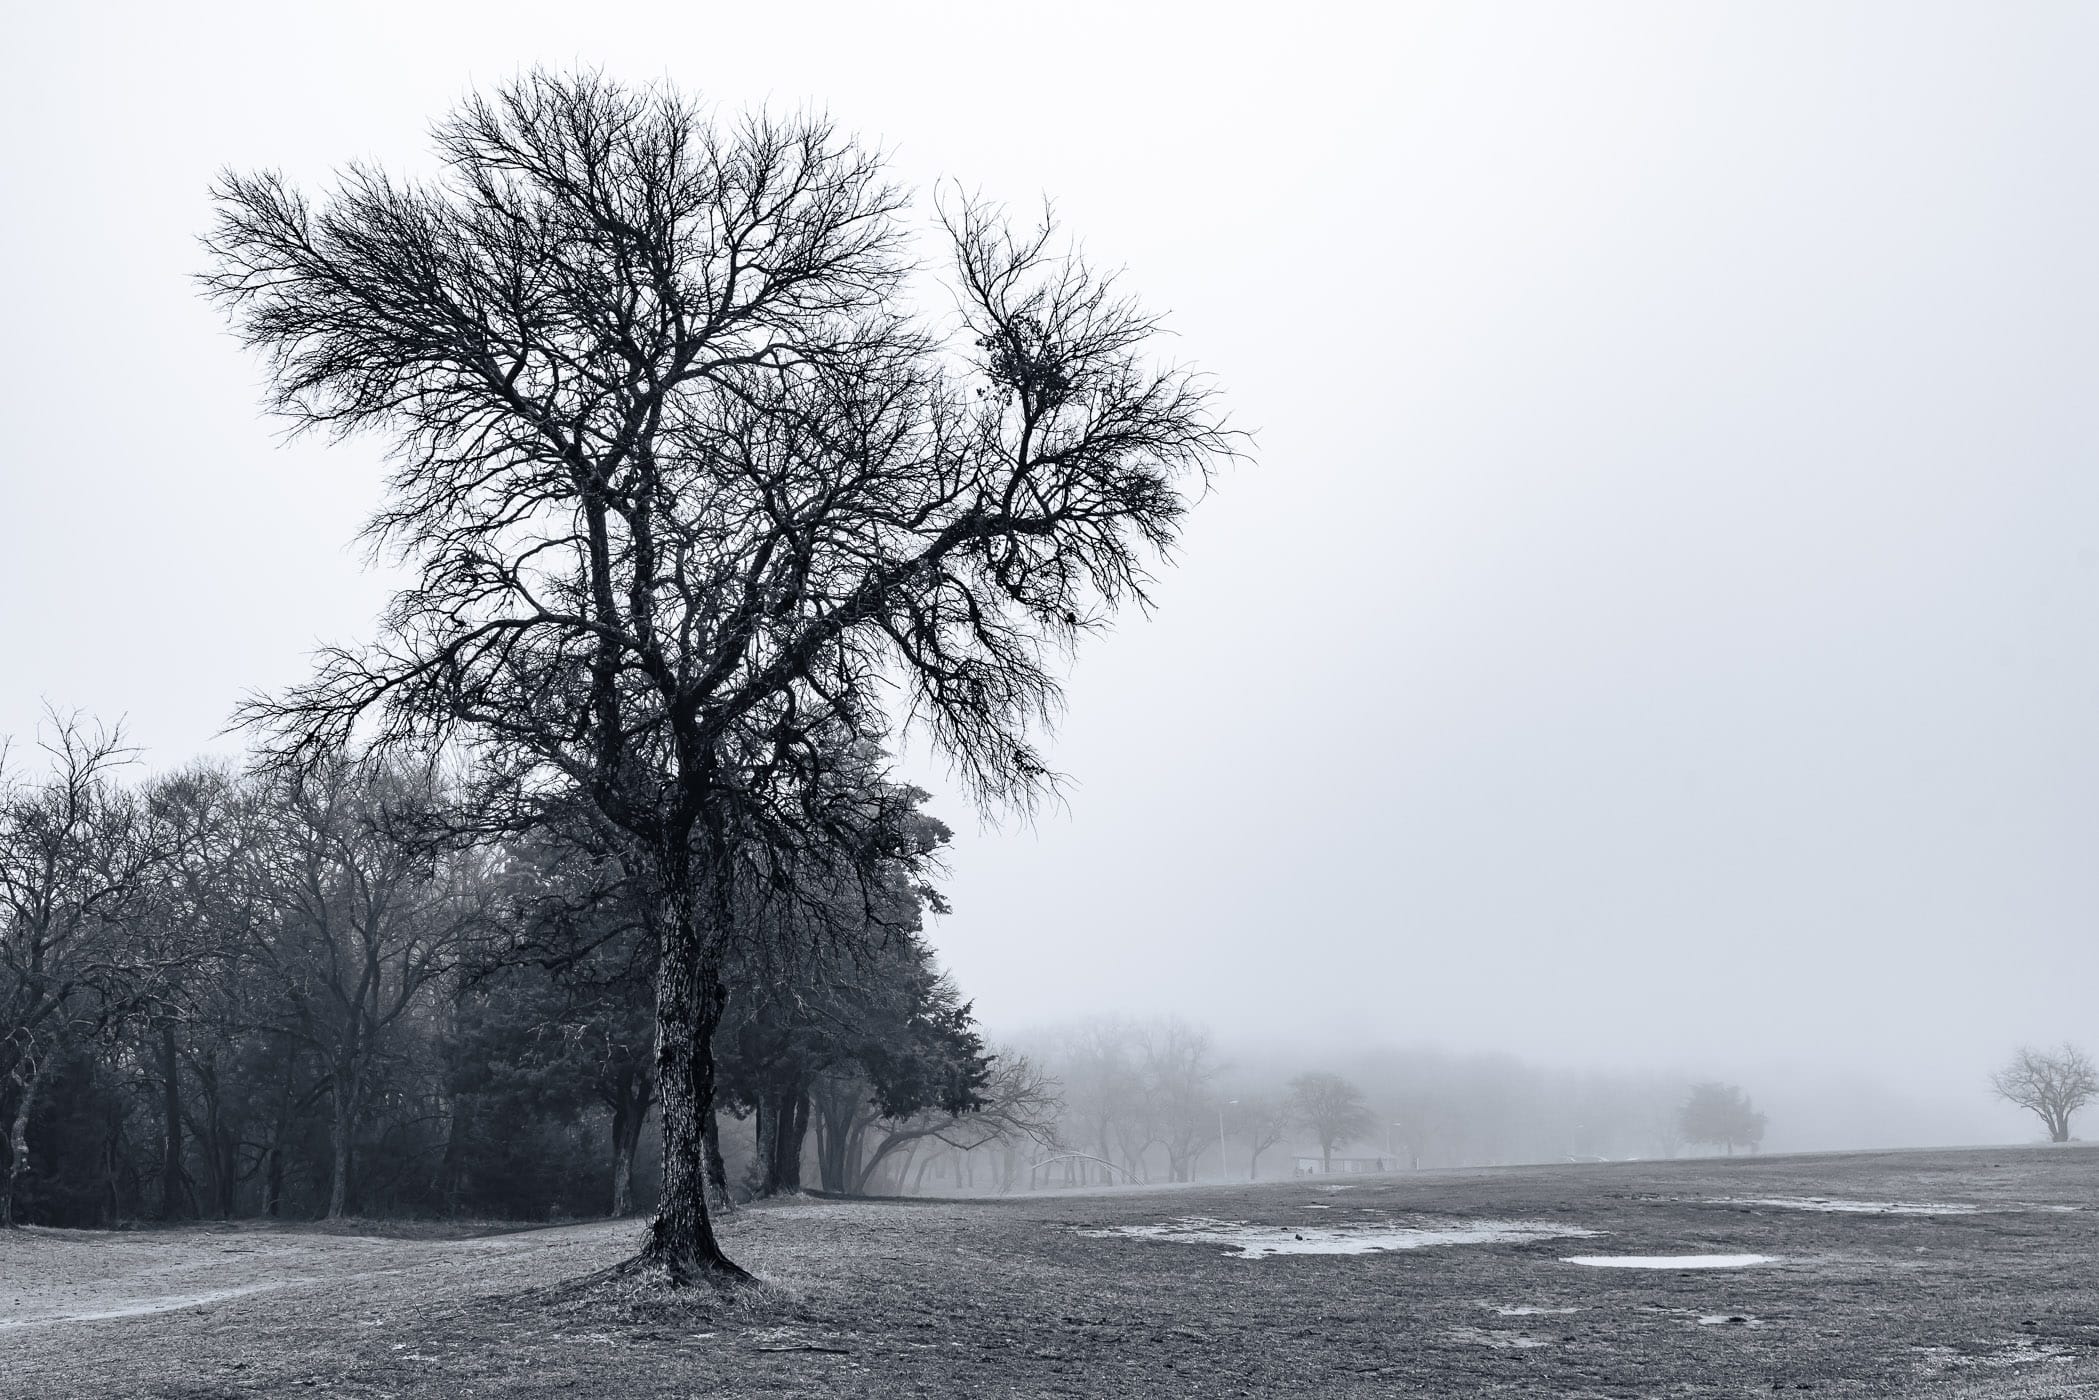 Trees in the morning fog at McKinney, Texas' Erwin Park.